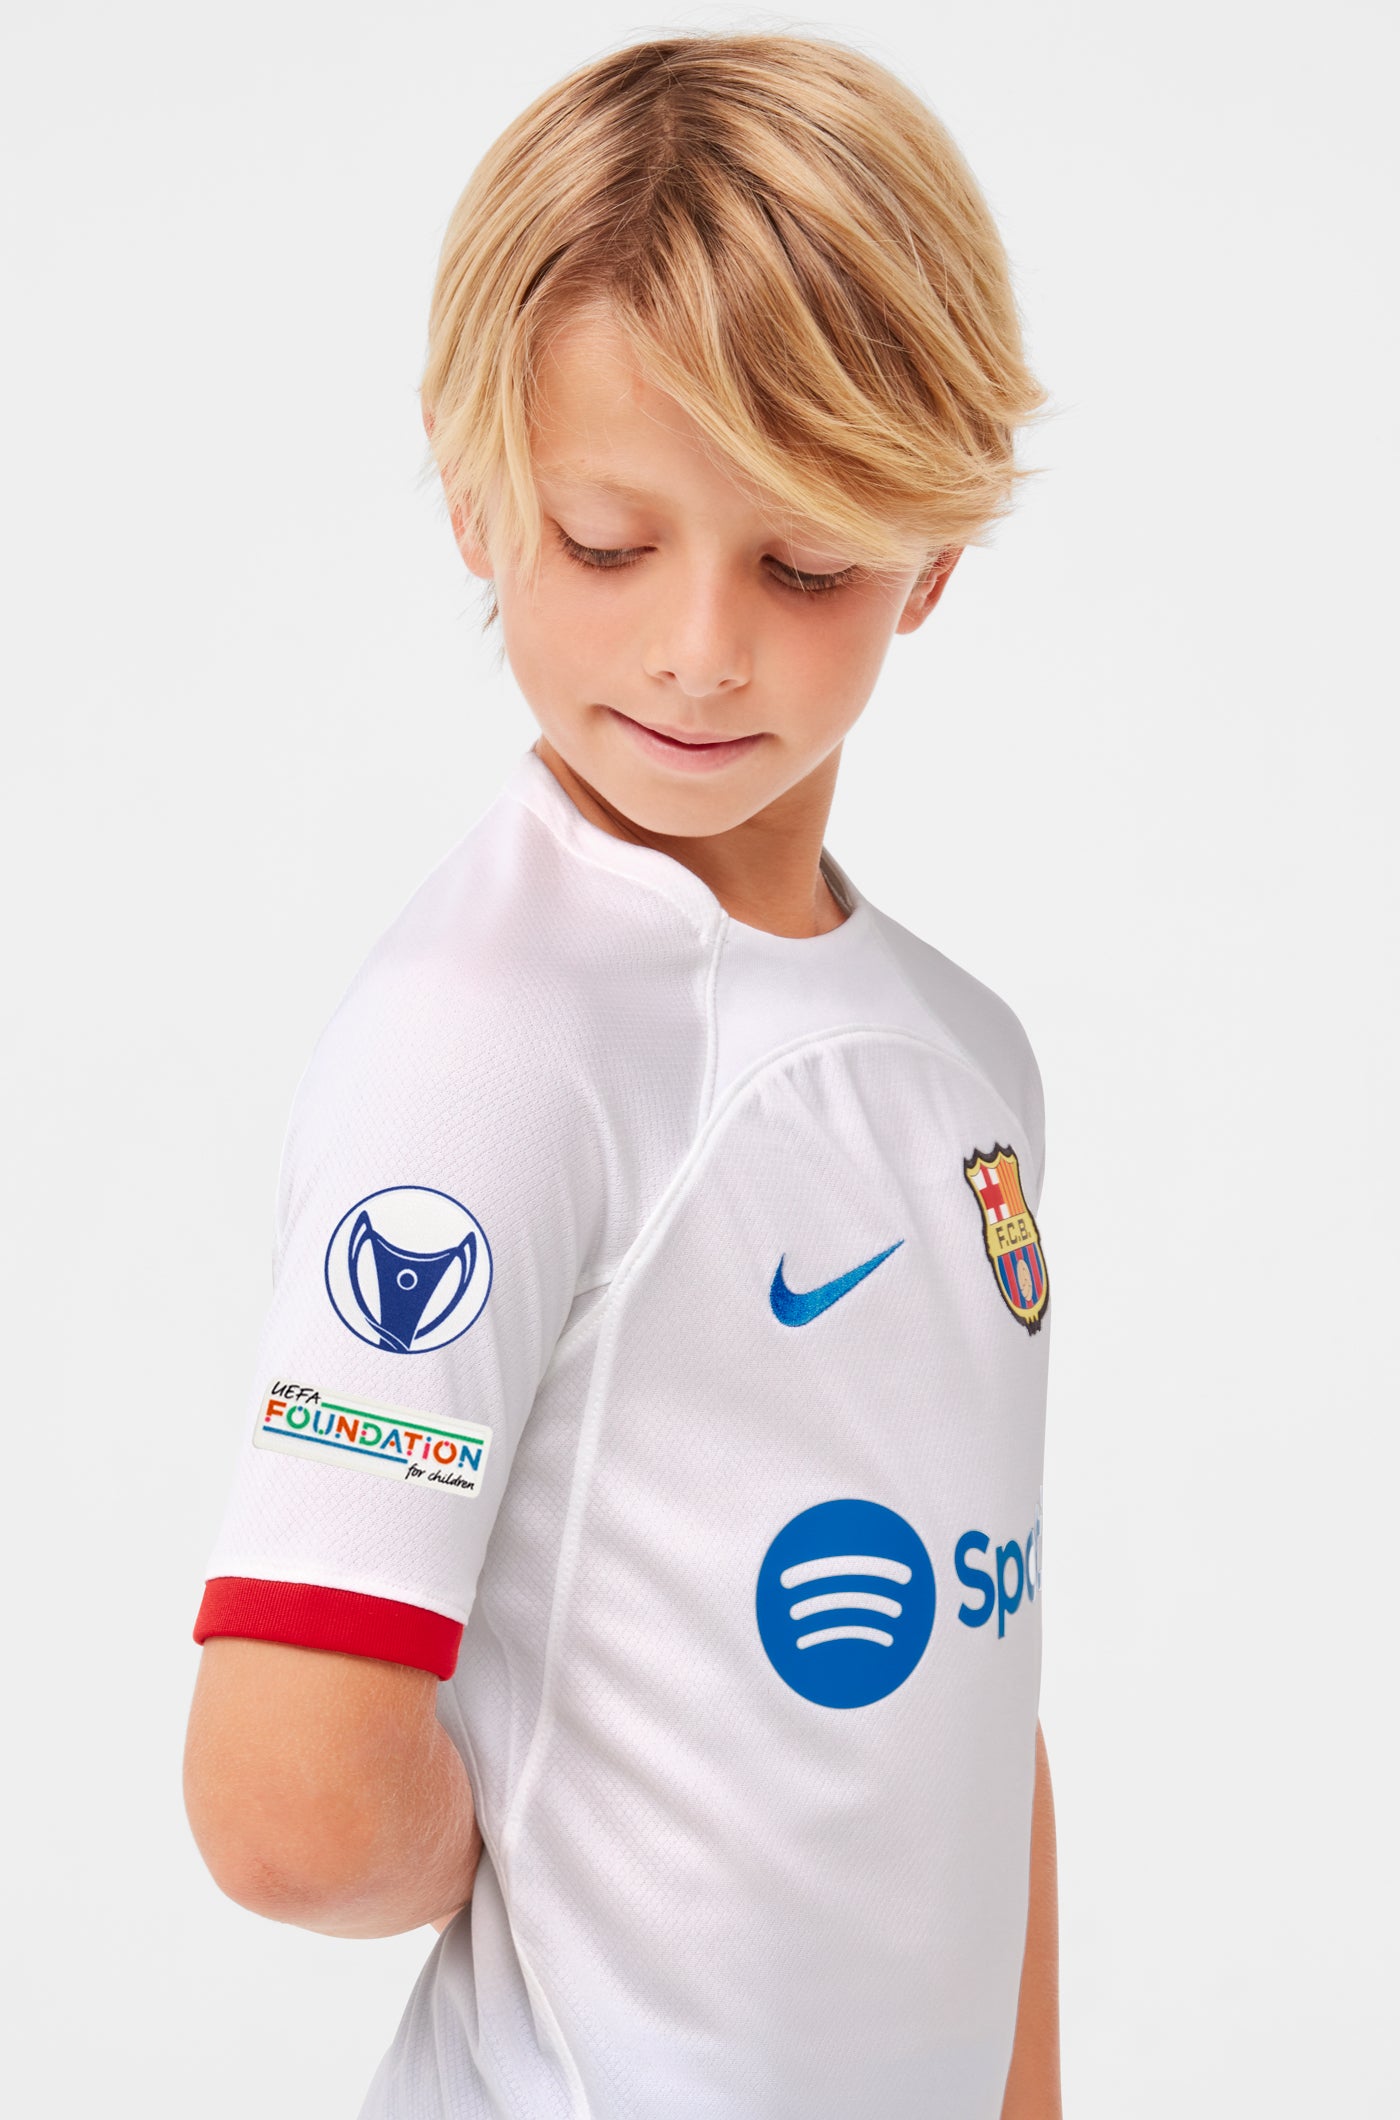 UWCL FC Barcelona away shirt 23/24 – Junior  - AITANA